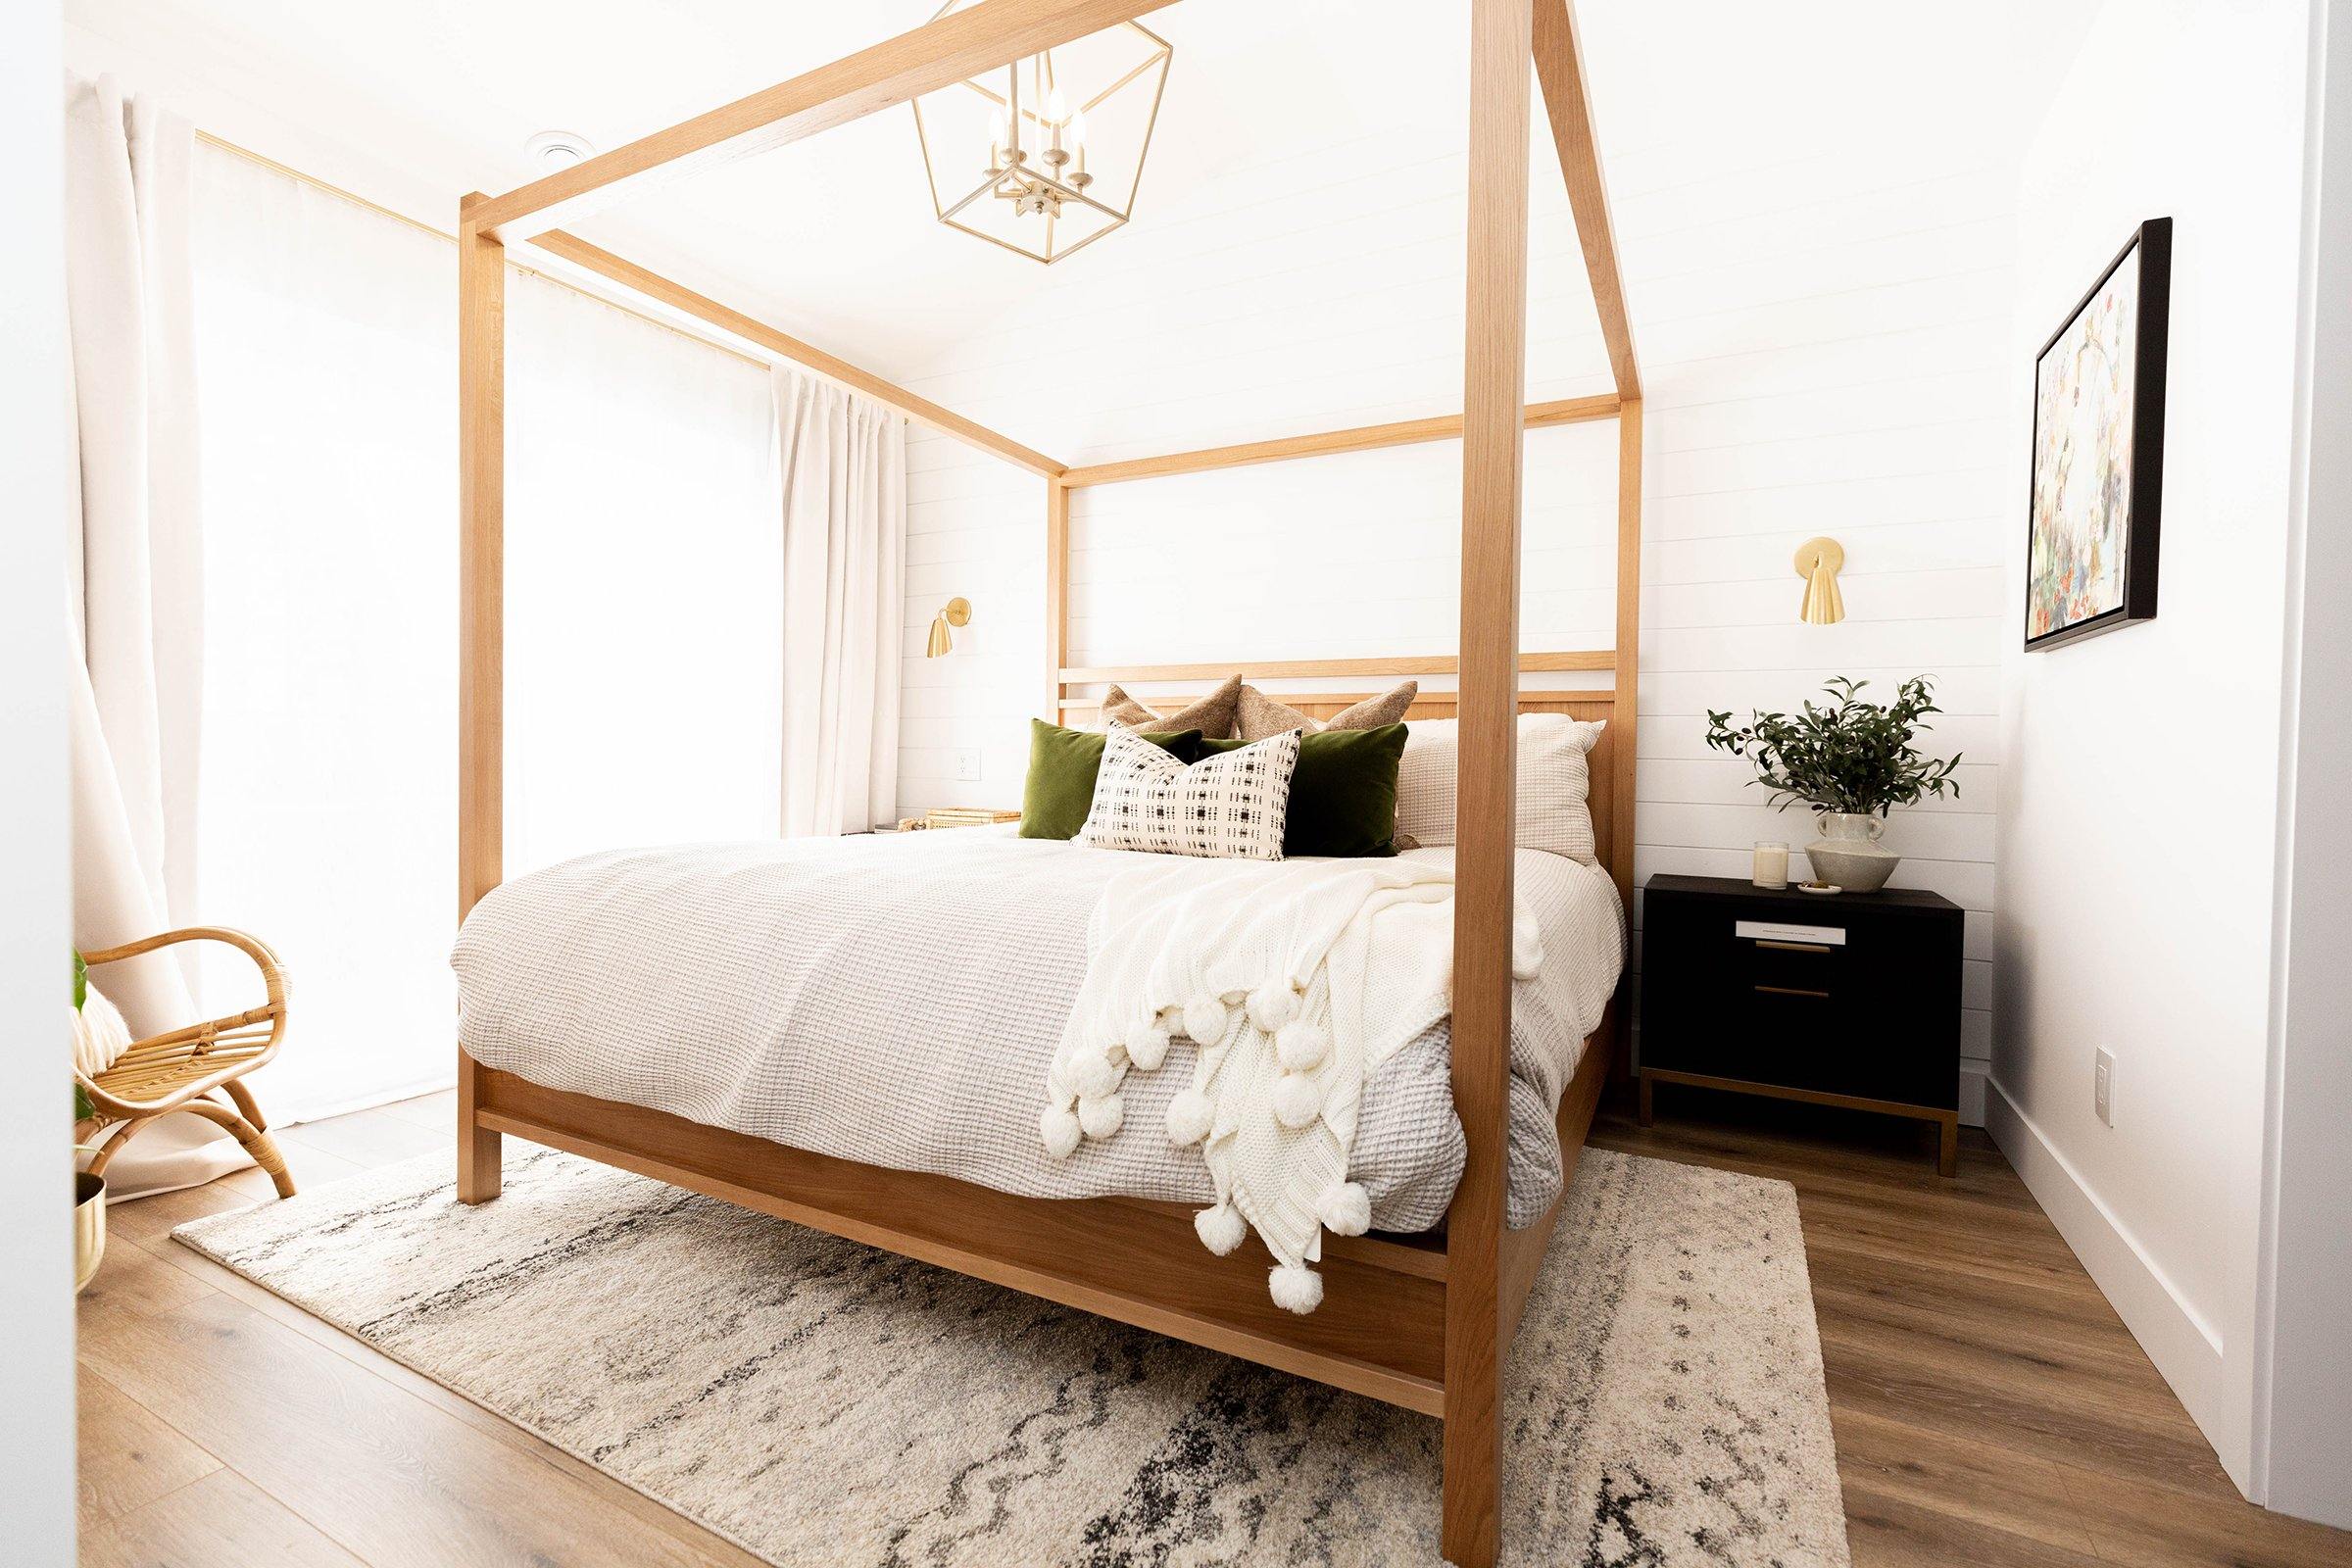 Fulton Oak Canopy Bed - Reimagine Designs - bed, new